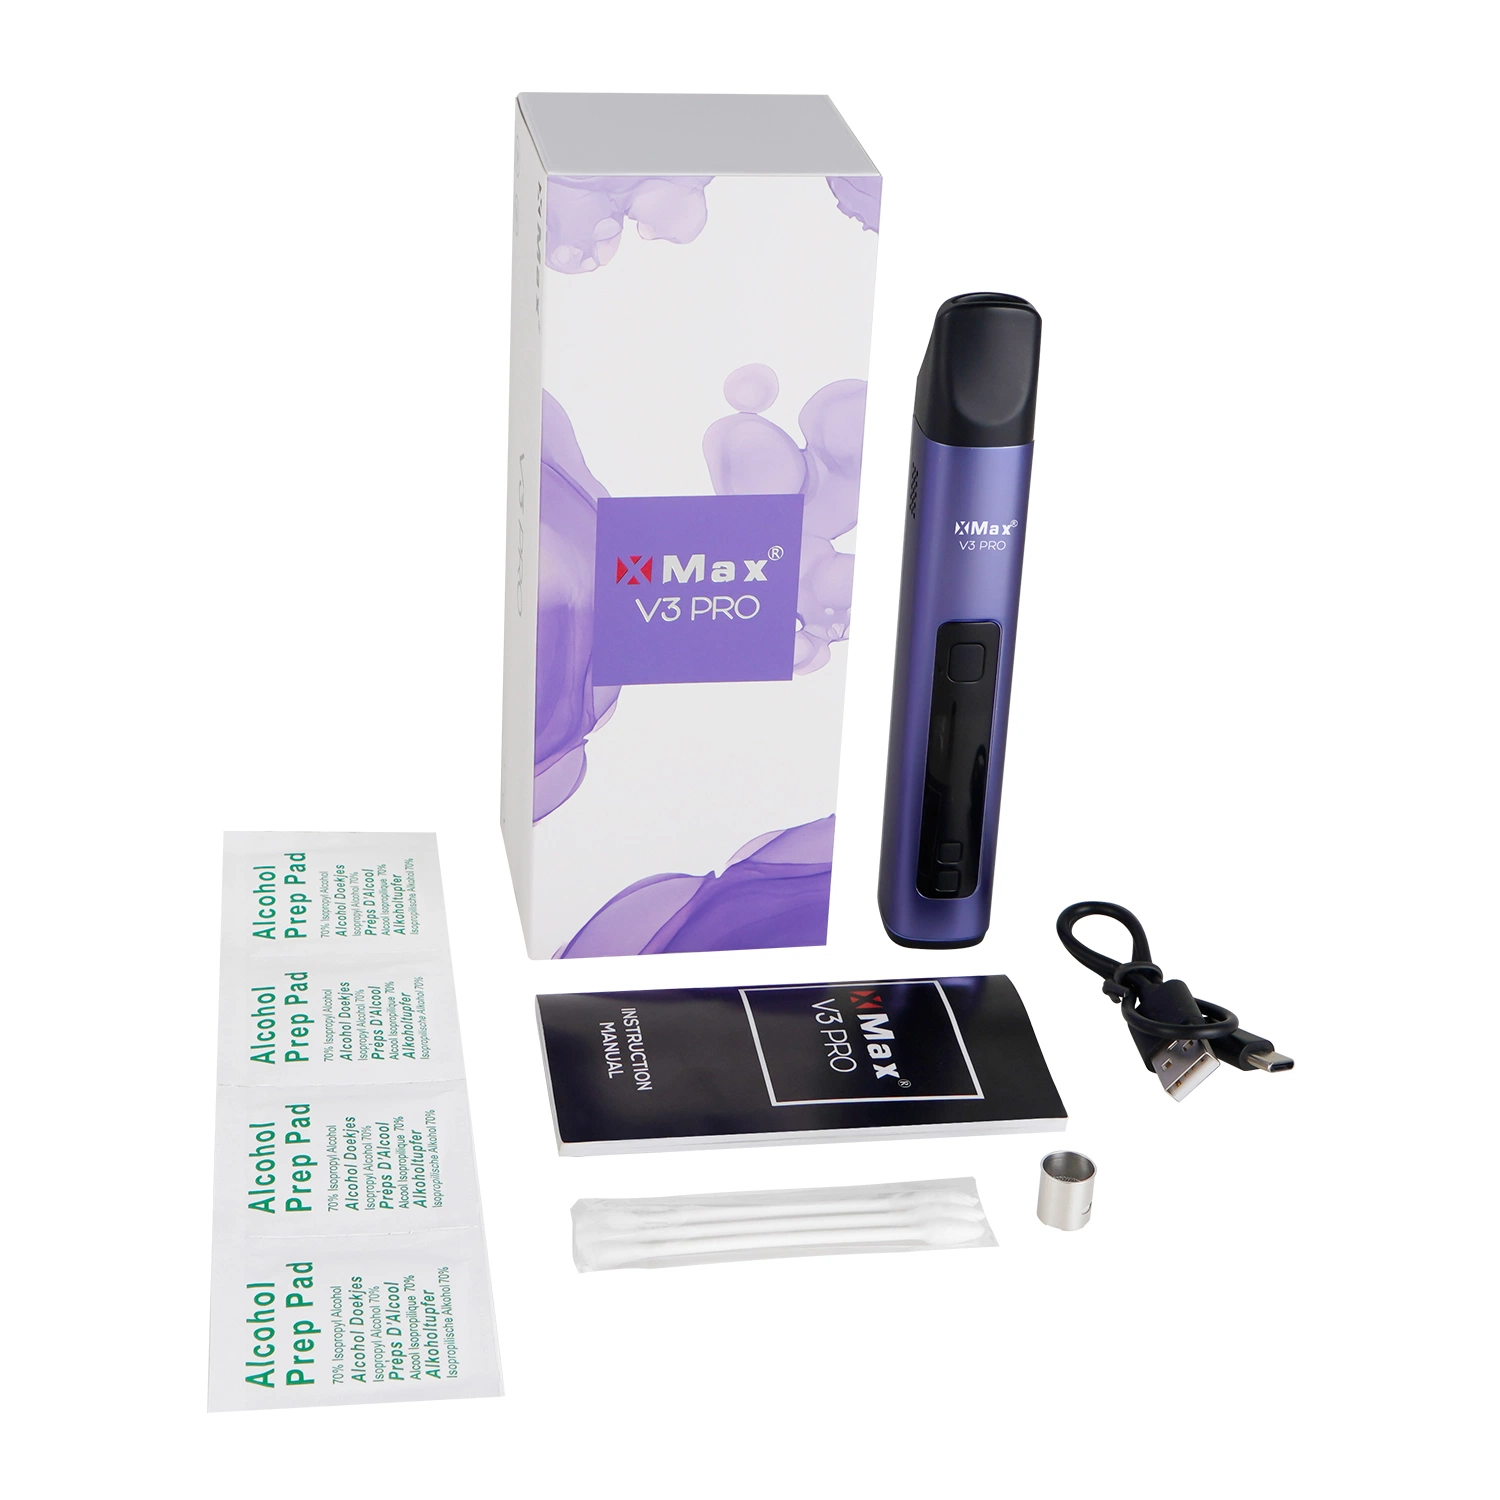 Topgreen New Herb Tasty Konvektionstechnologie Vape Pen Smoke Manufacture E-Cigarette Starter Kits Xmax V3 pro Neueste Produkte auf dem Markt